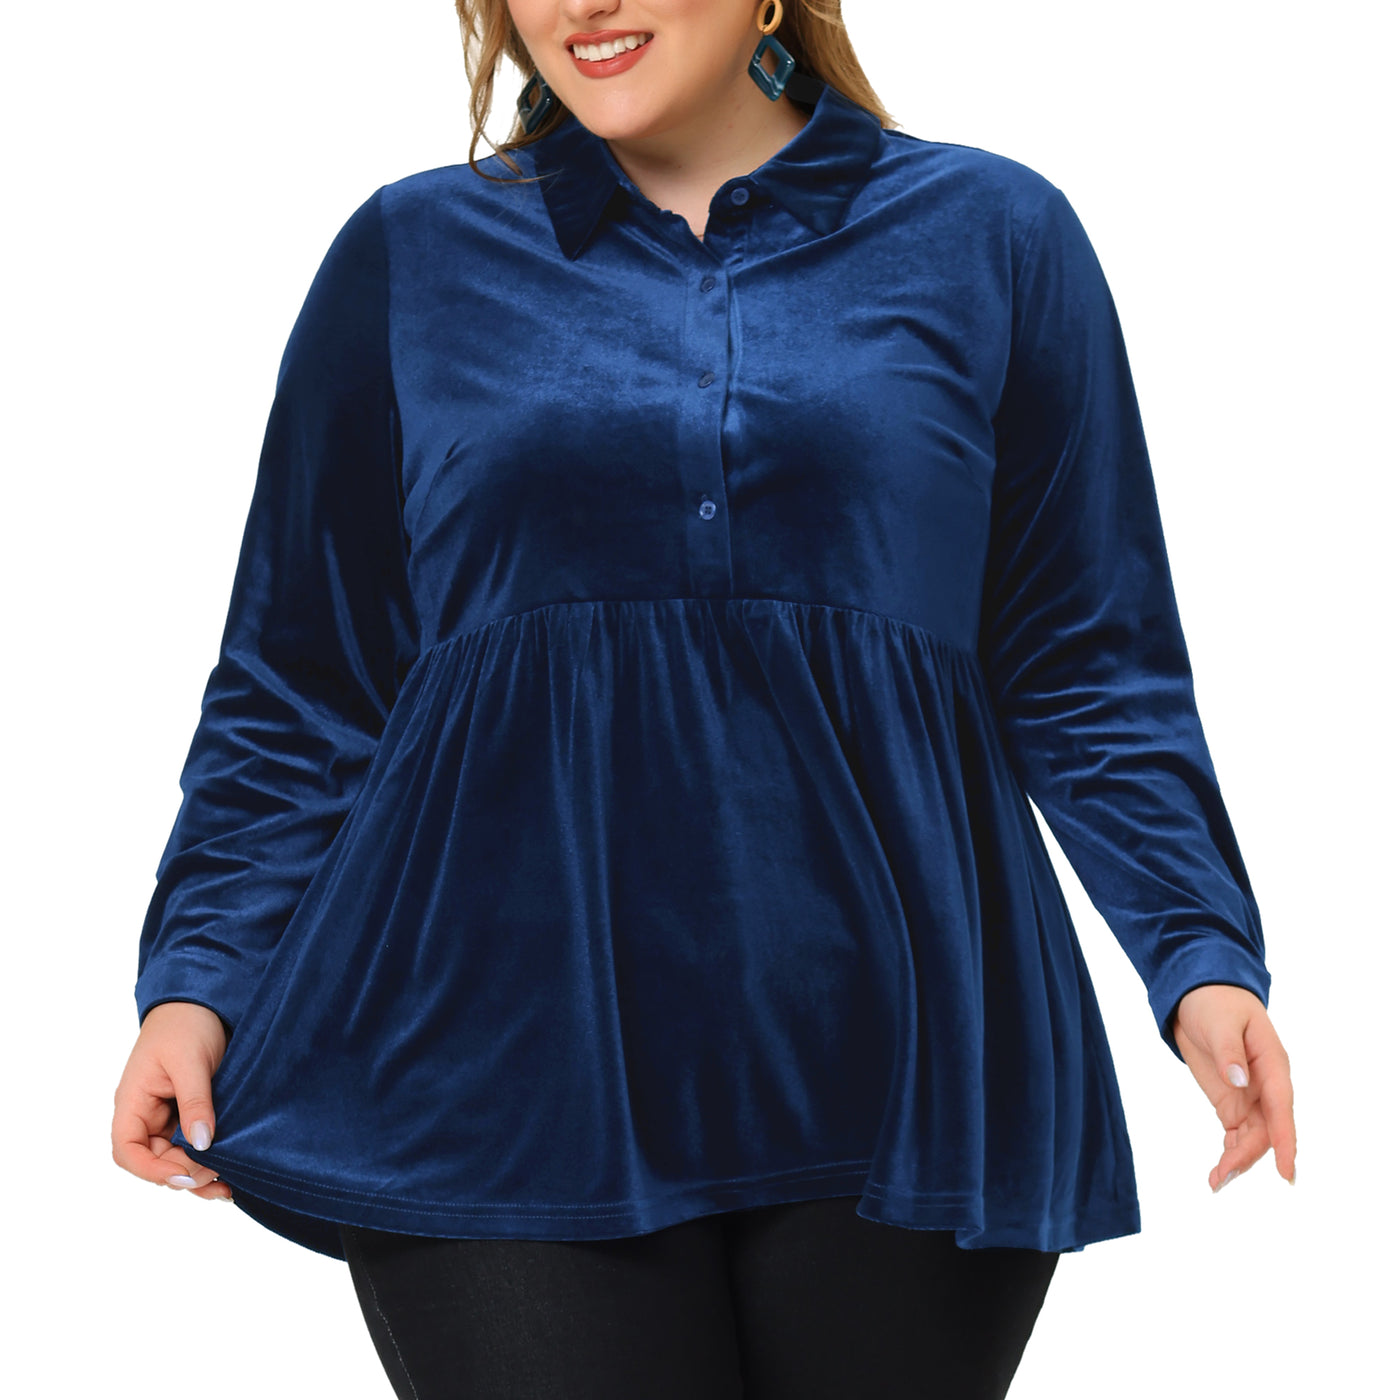 Bublédon Women's Plus Size Velvet Tops Long Sleeve Button Down Casual Babydolls Shirts